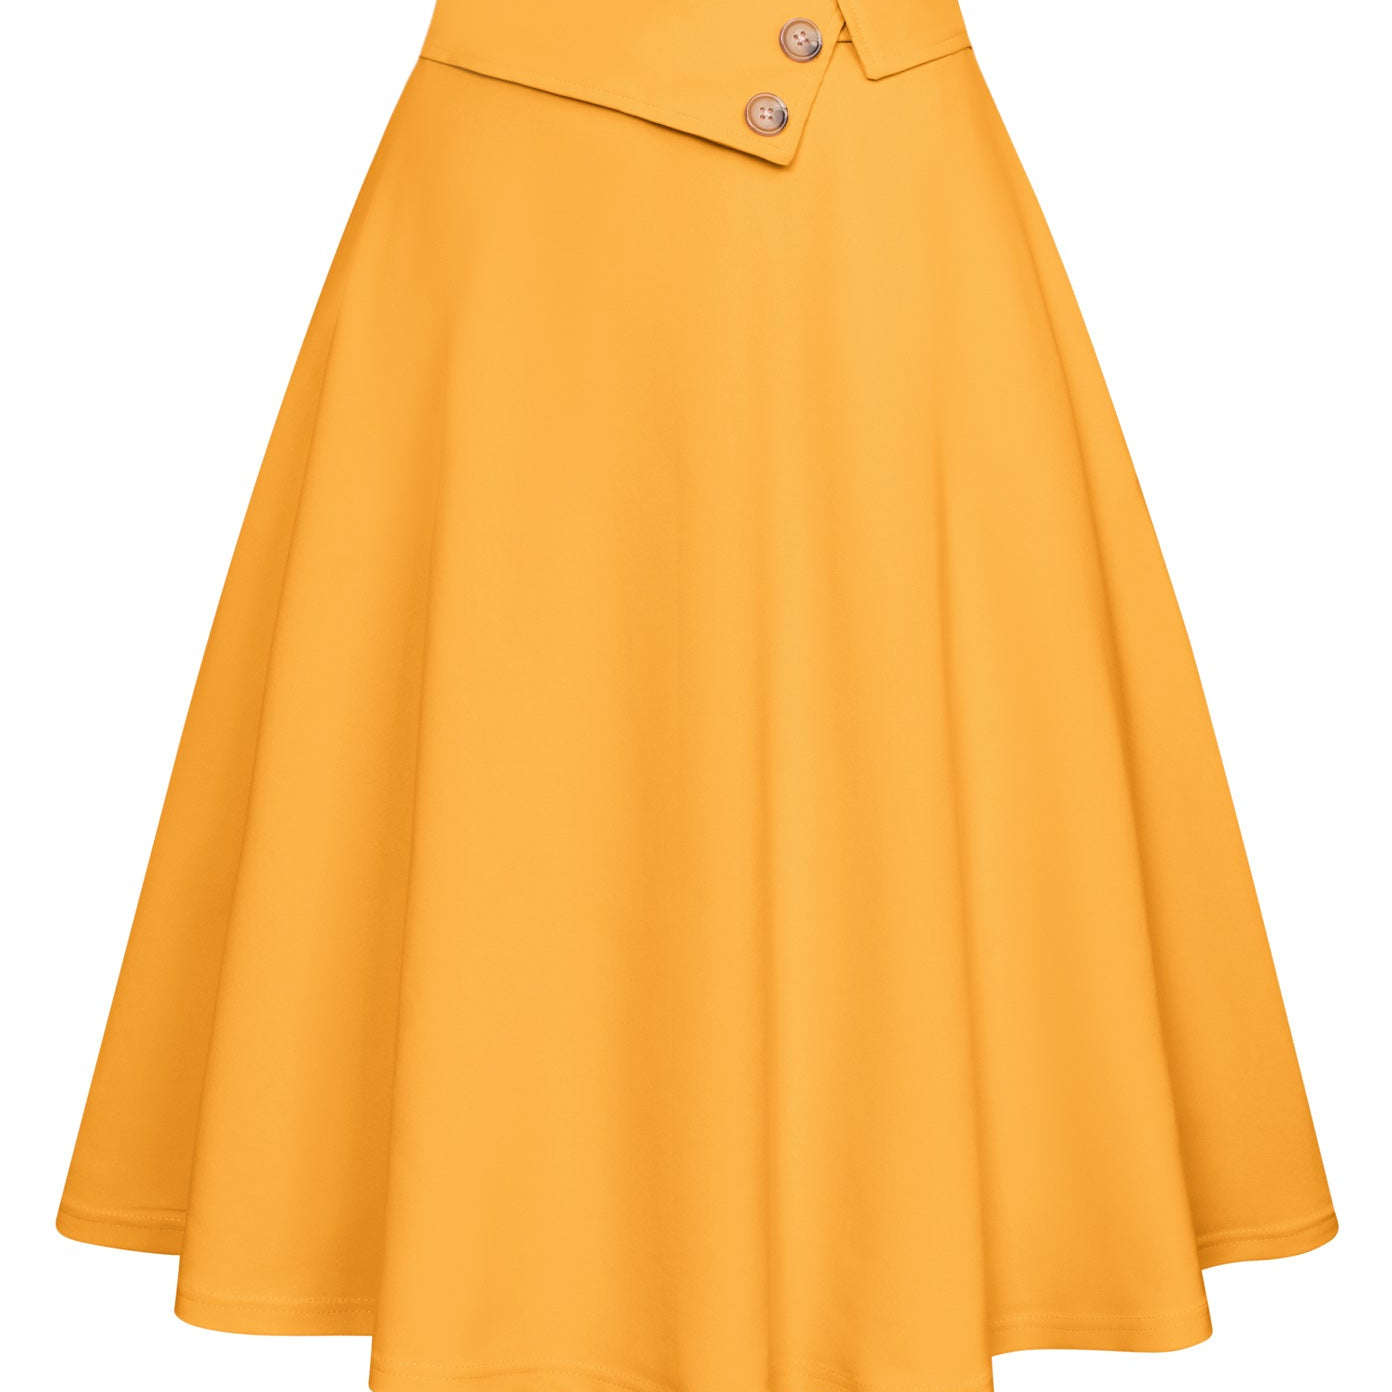 Vintage Solid Color Swing Skirt